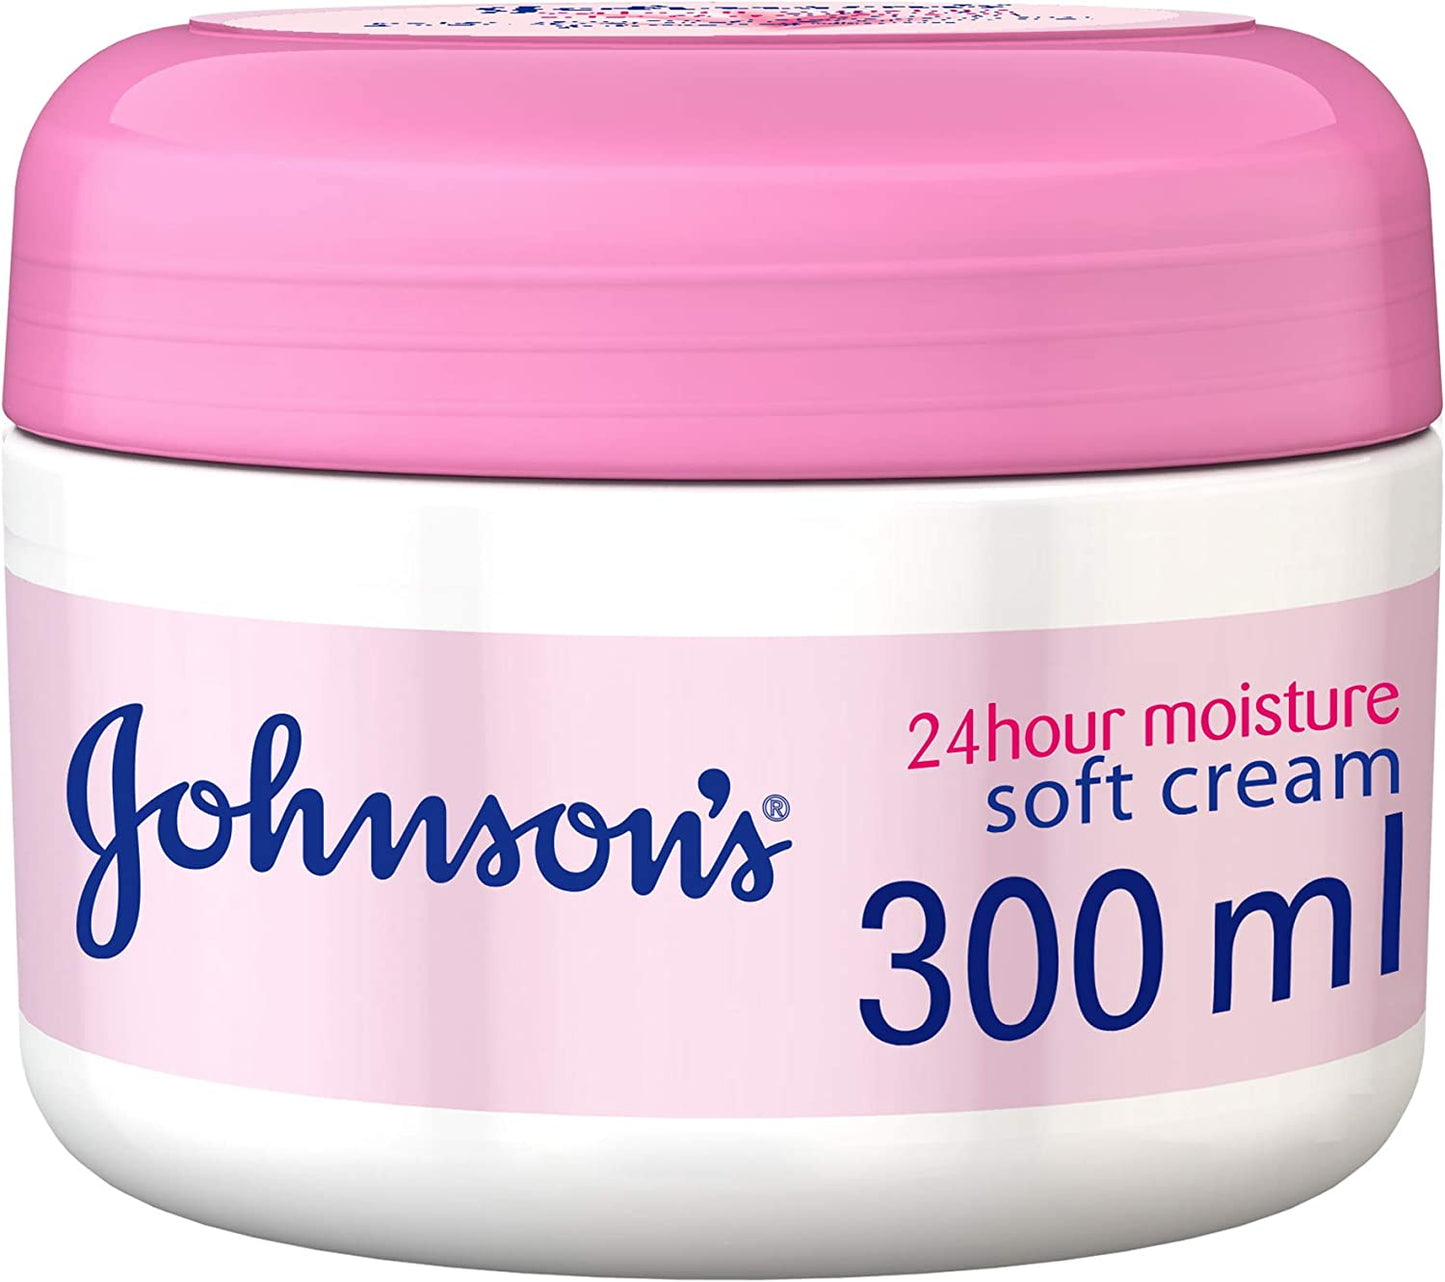 Johnson's Body Cream 24 HOUR Moisture Soft, 300ml